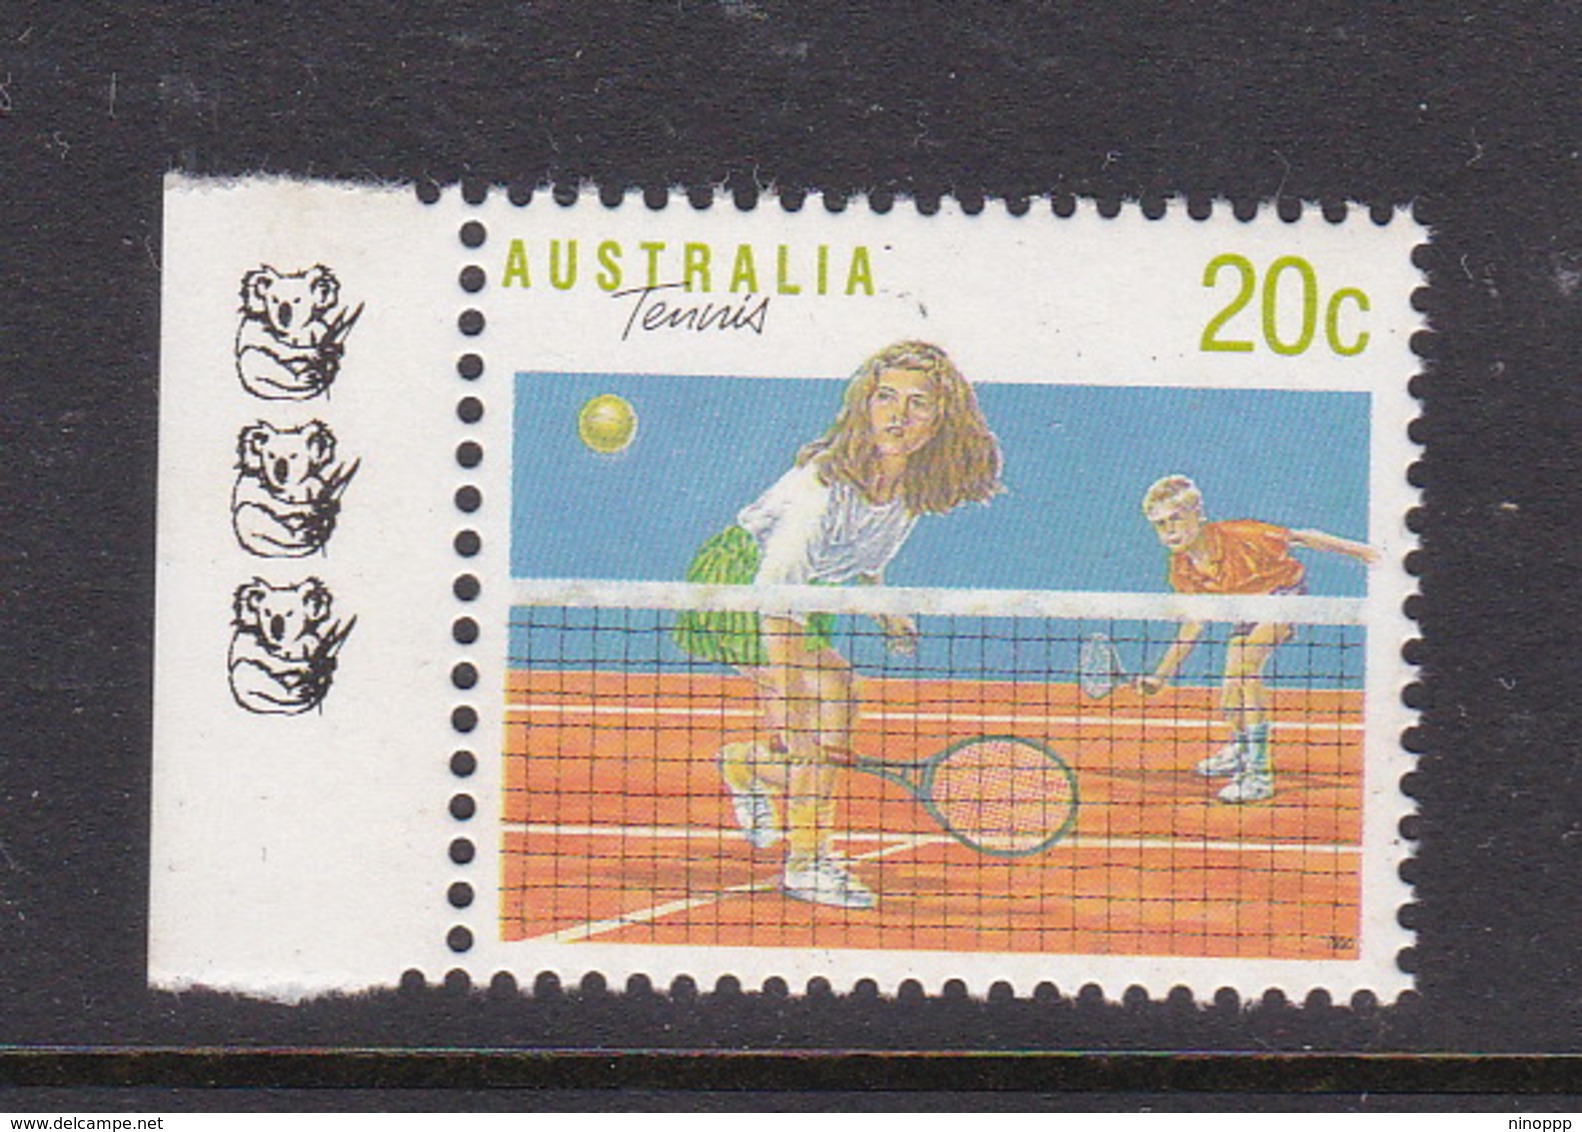 Australia ASC 1229c 1990 Sports 20c Tennis 3 Koala,mint Never Hinged - Prove & Ristampe